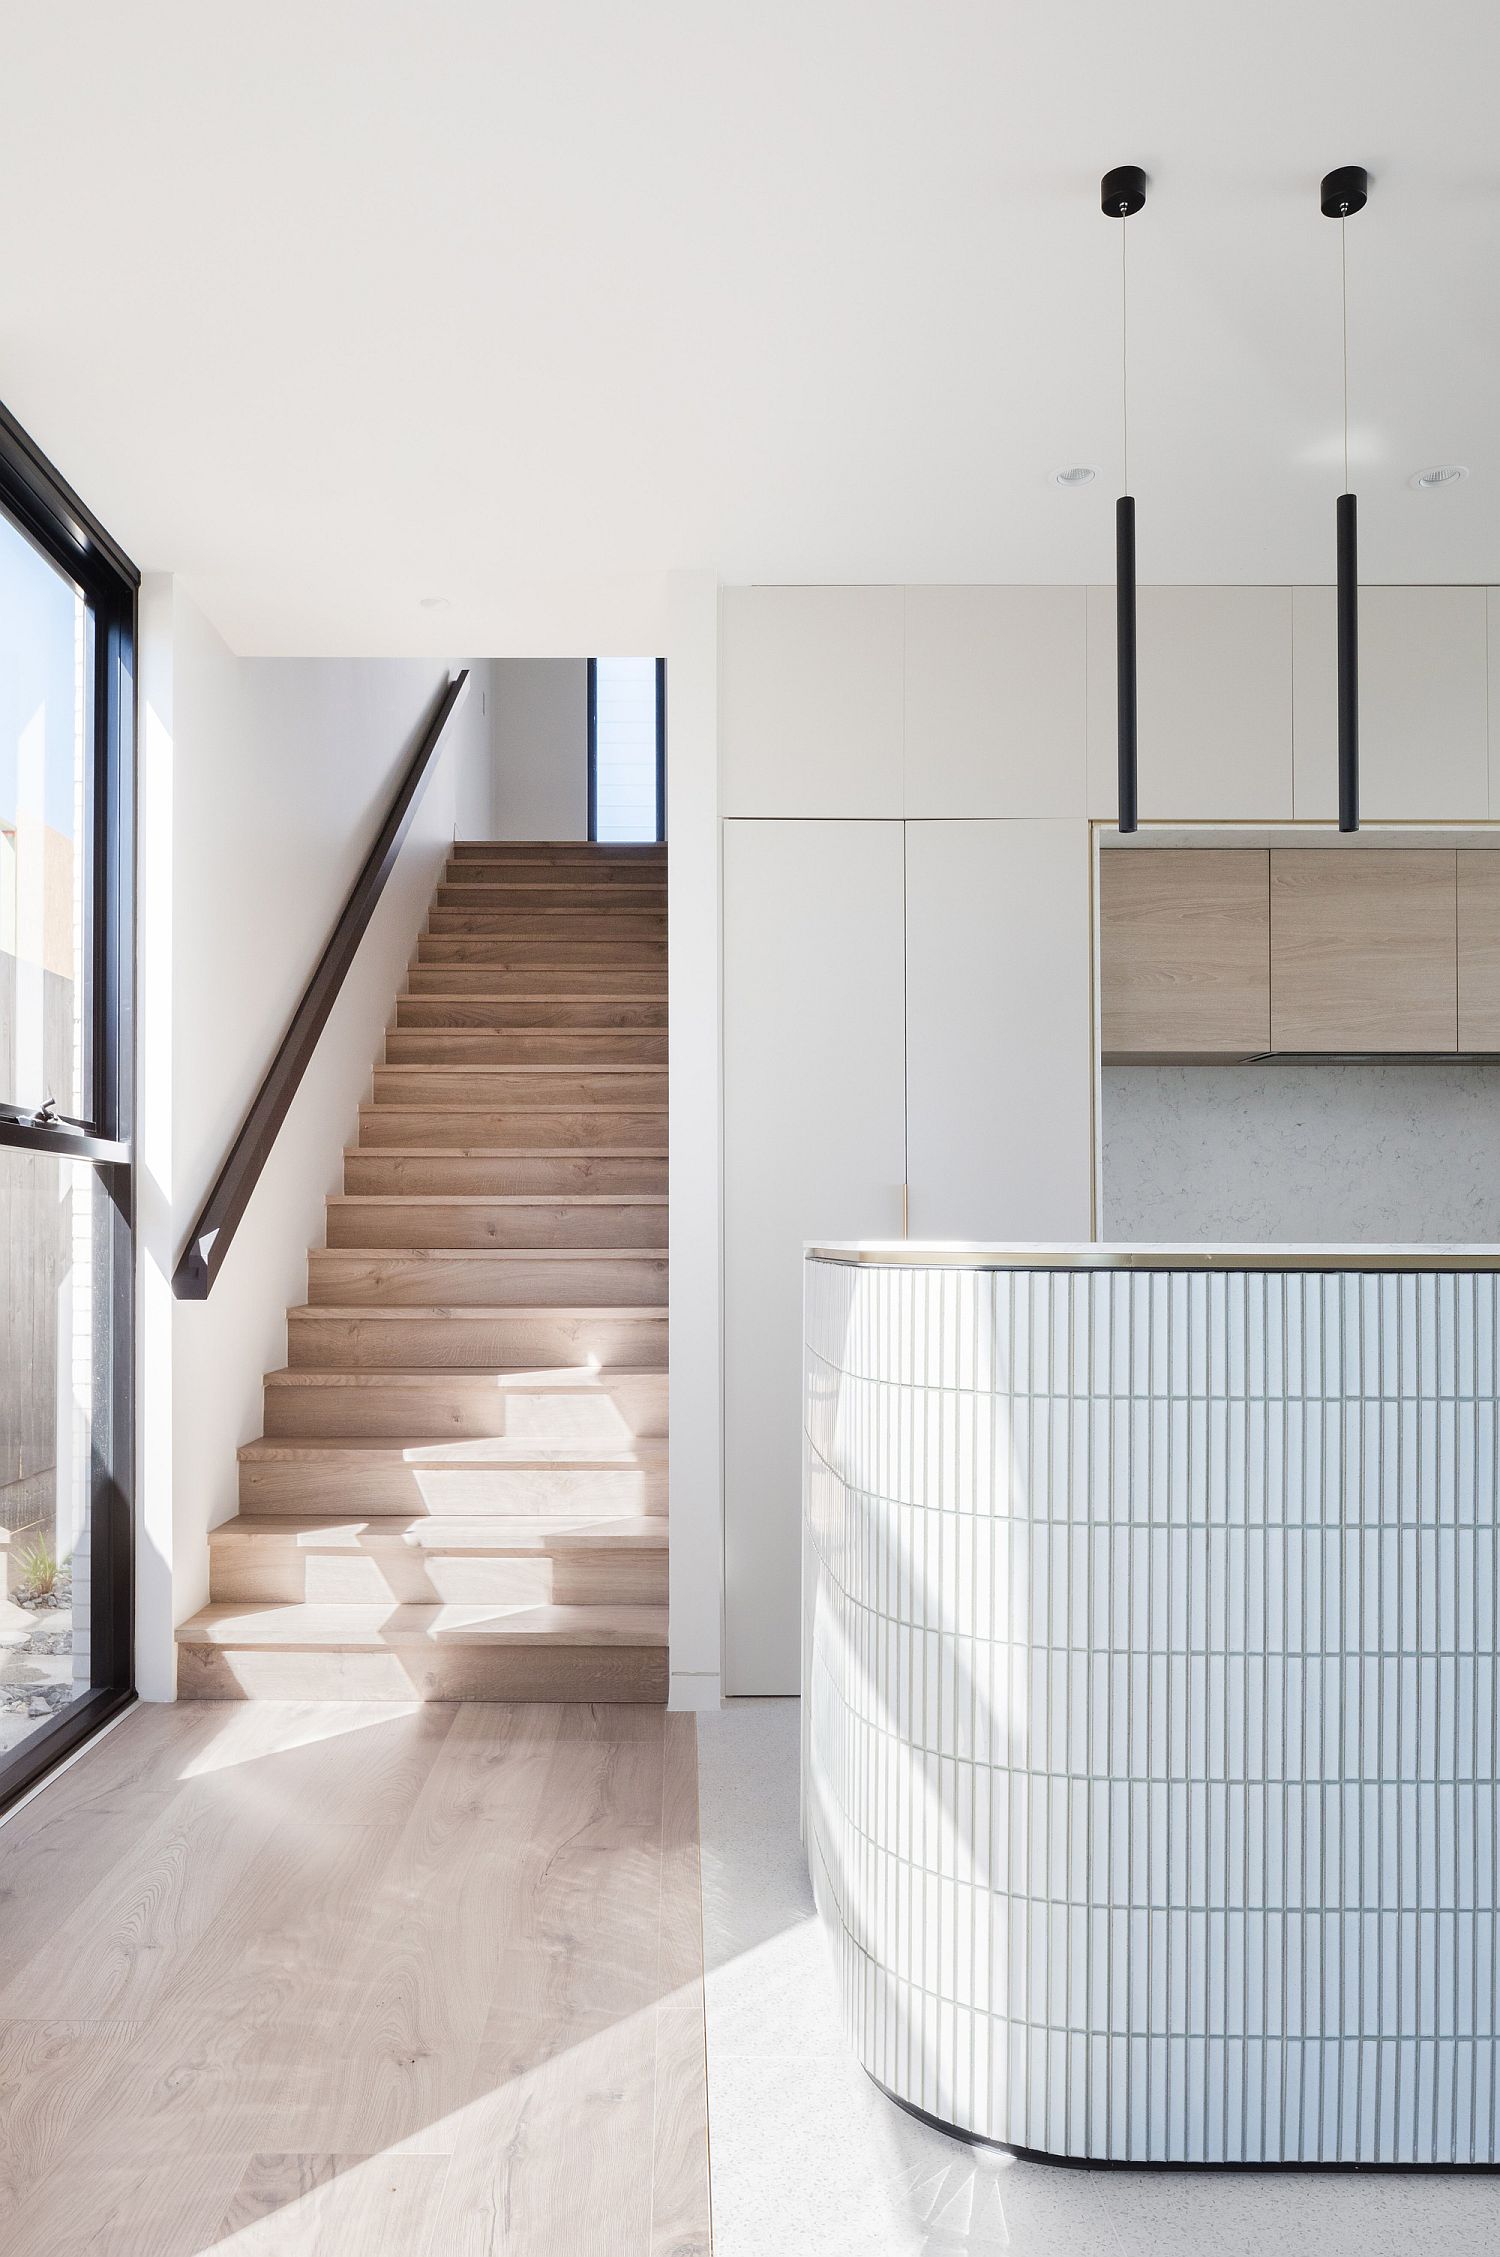 Wooden-stairway-next-to-the-curved-kitchen-island